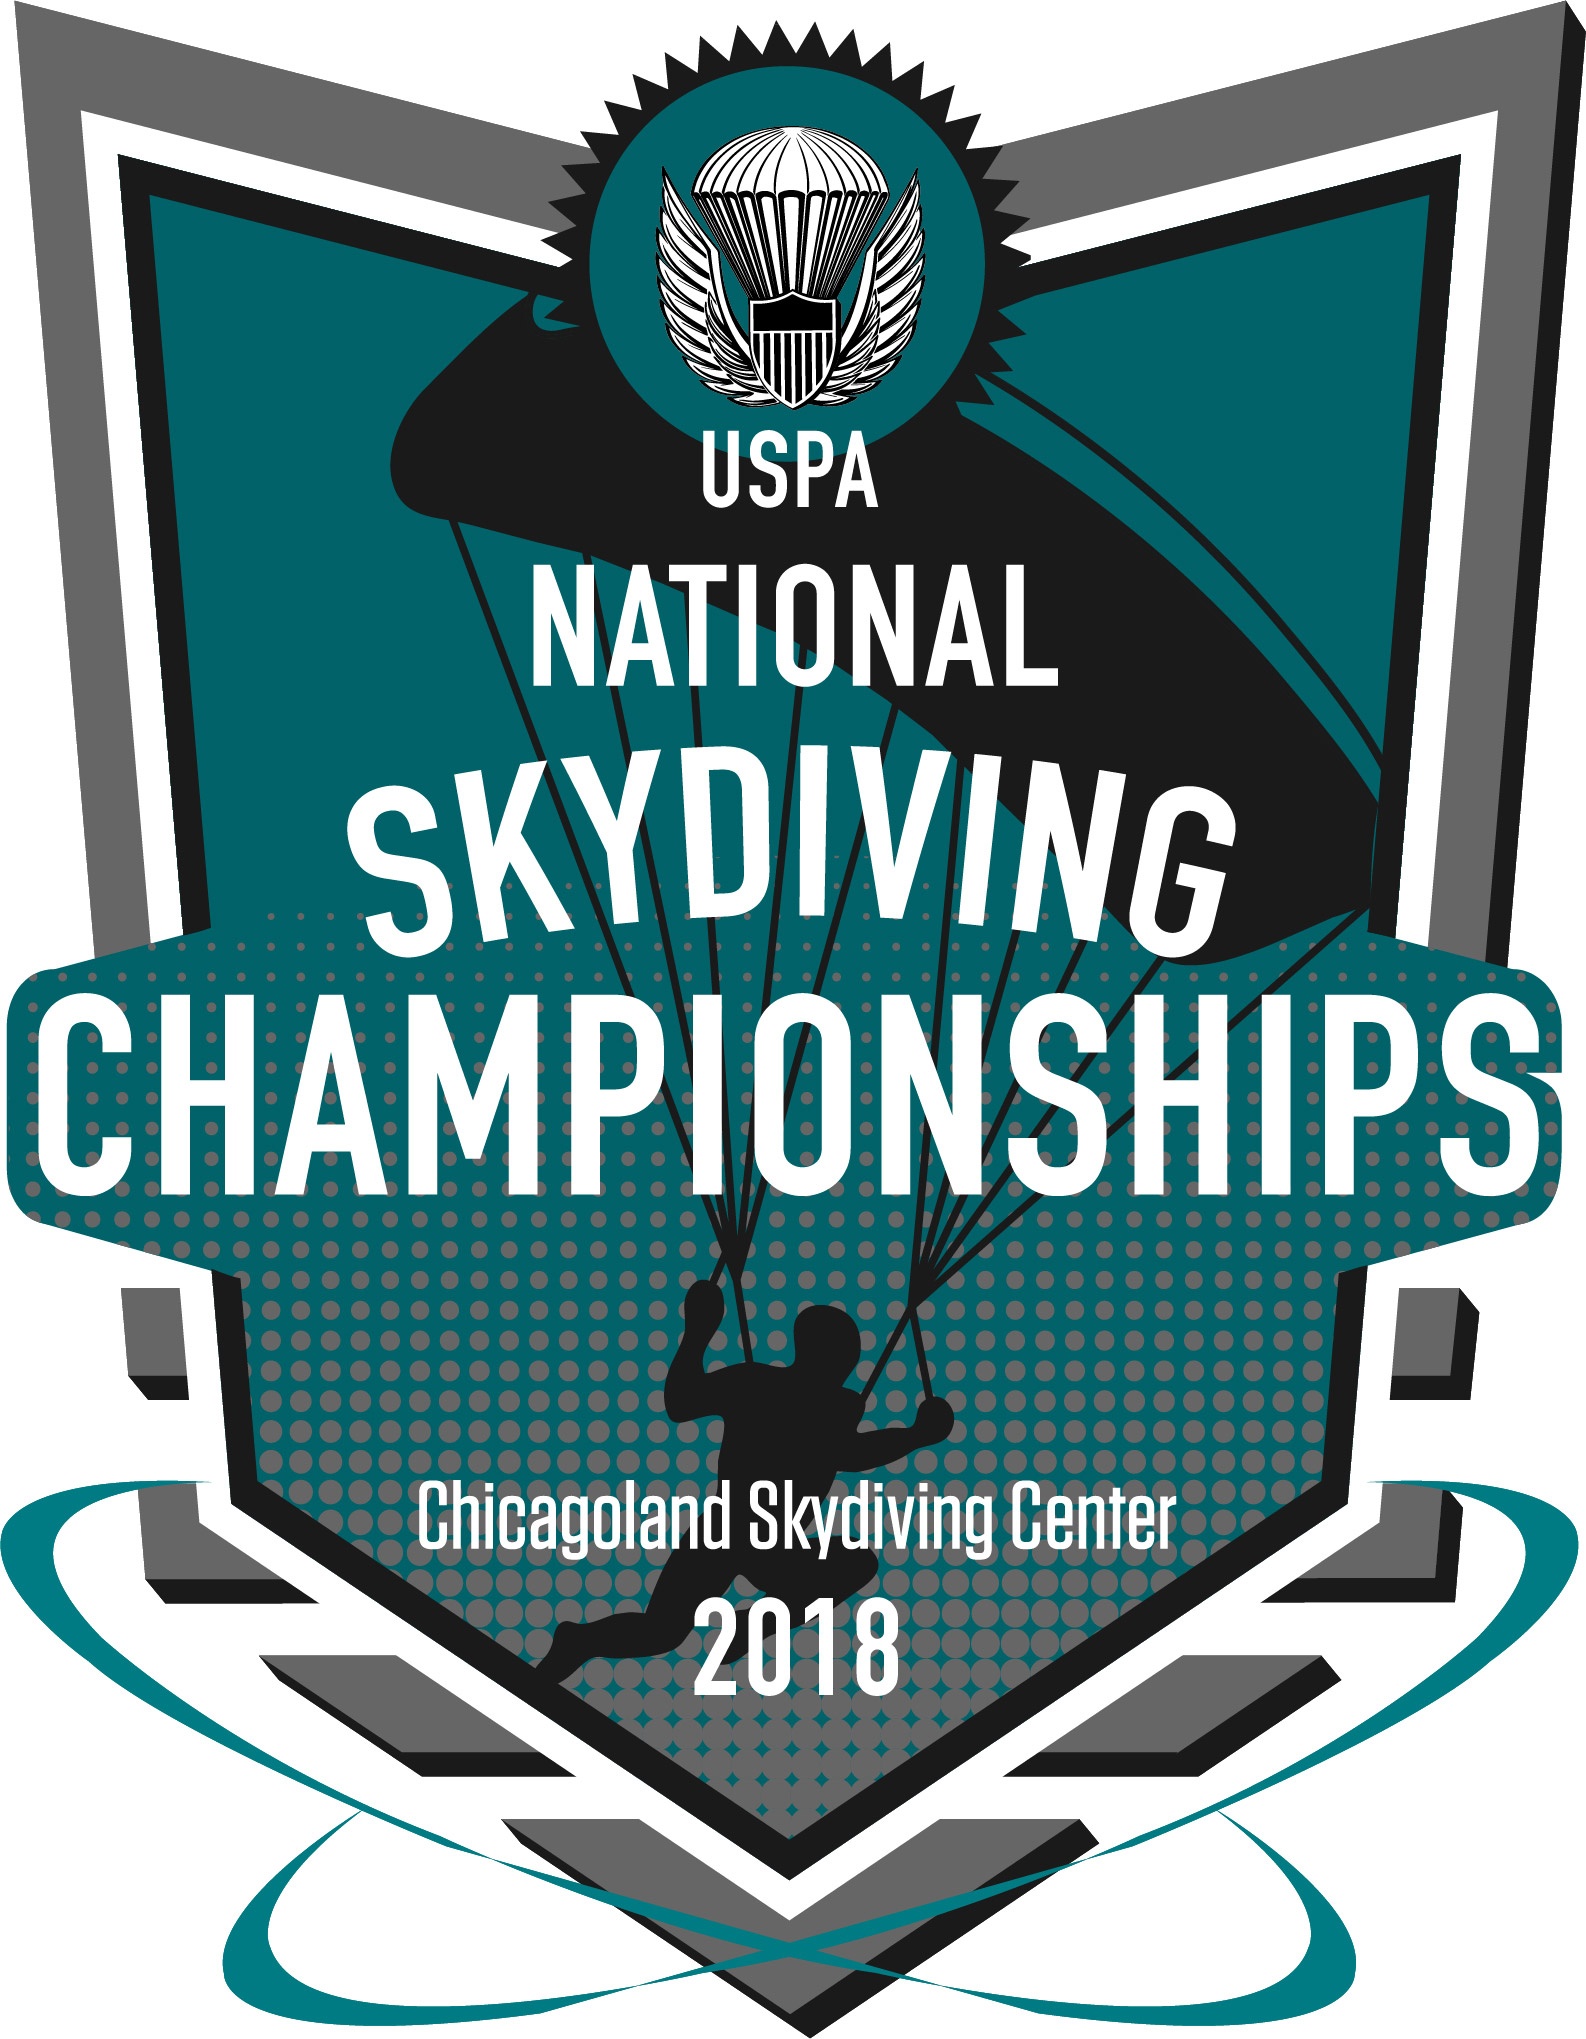 USPA National Skydiving Championships 2018